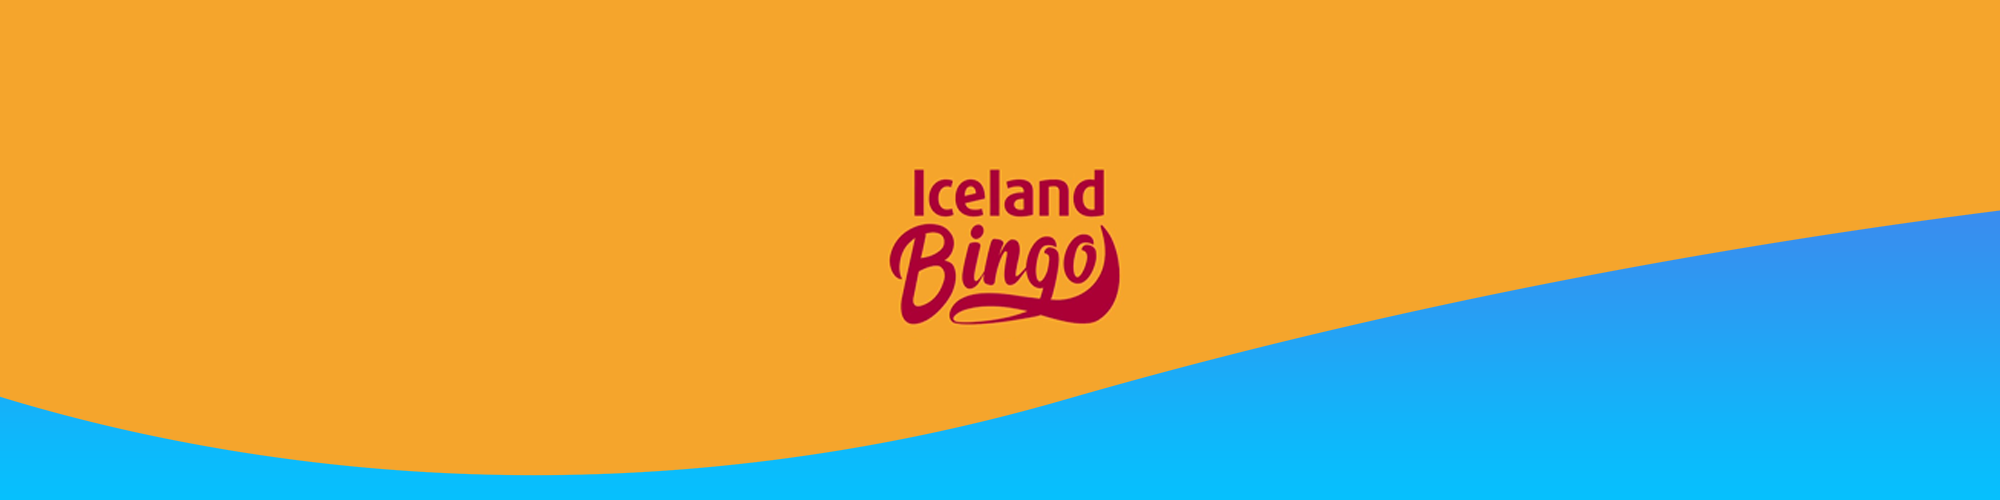 Iceland Bingo Alternative on EazeGames